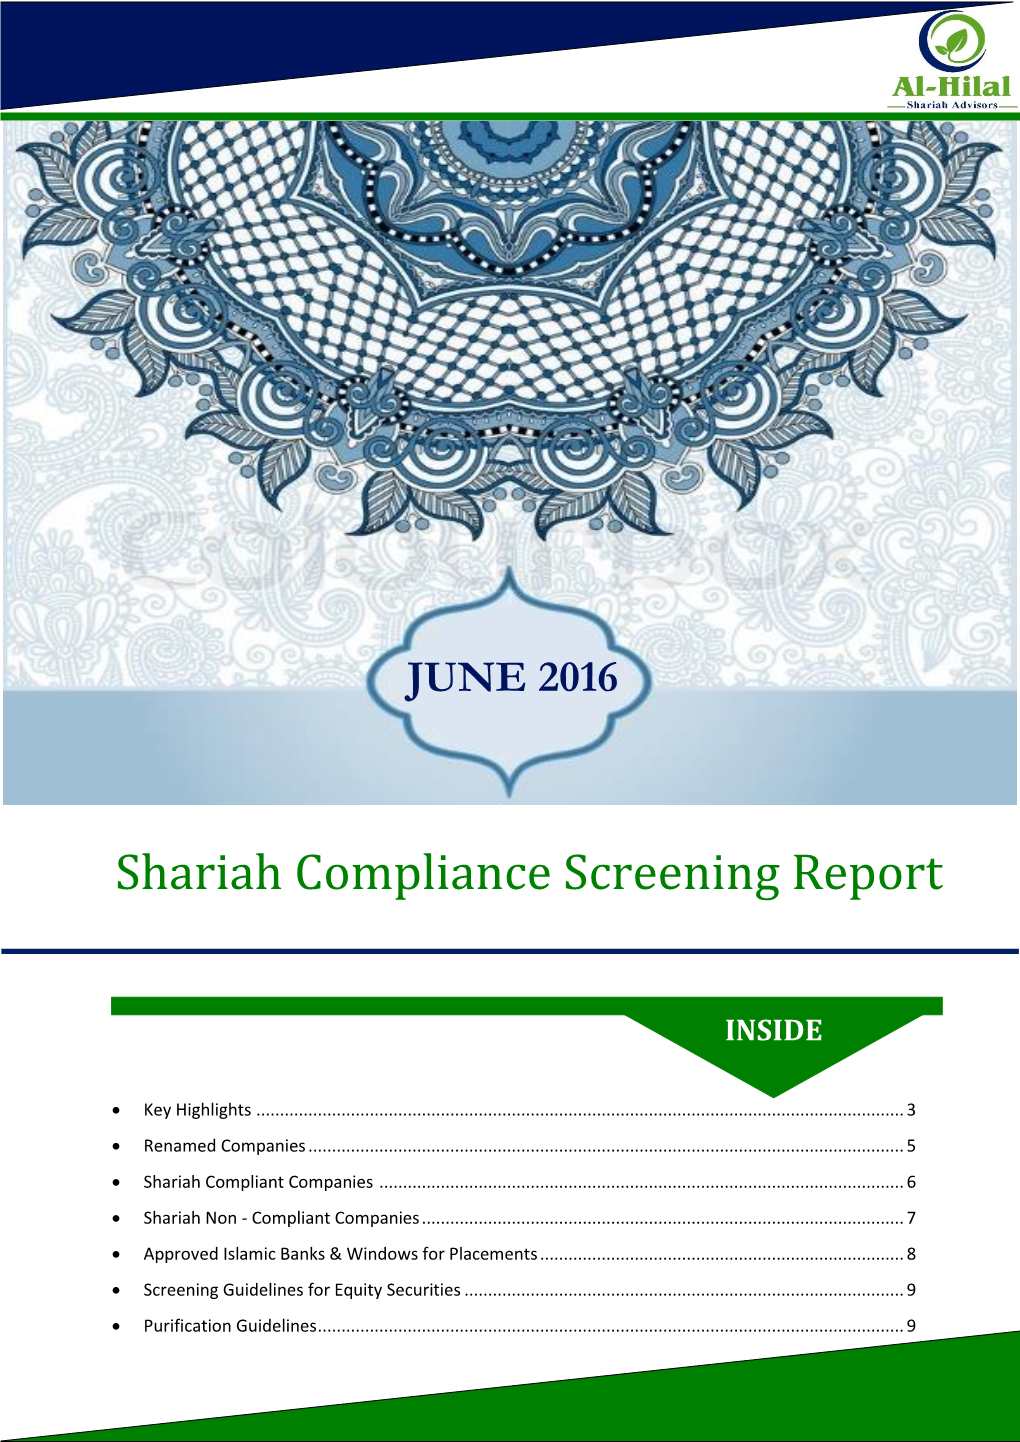 Shariah Compliance Screening Report